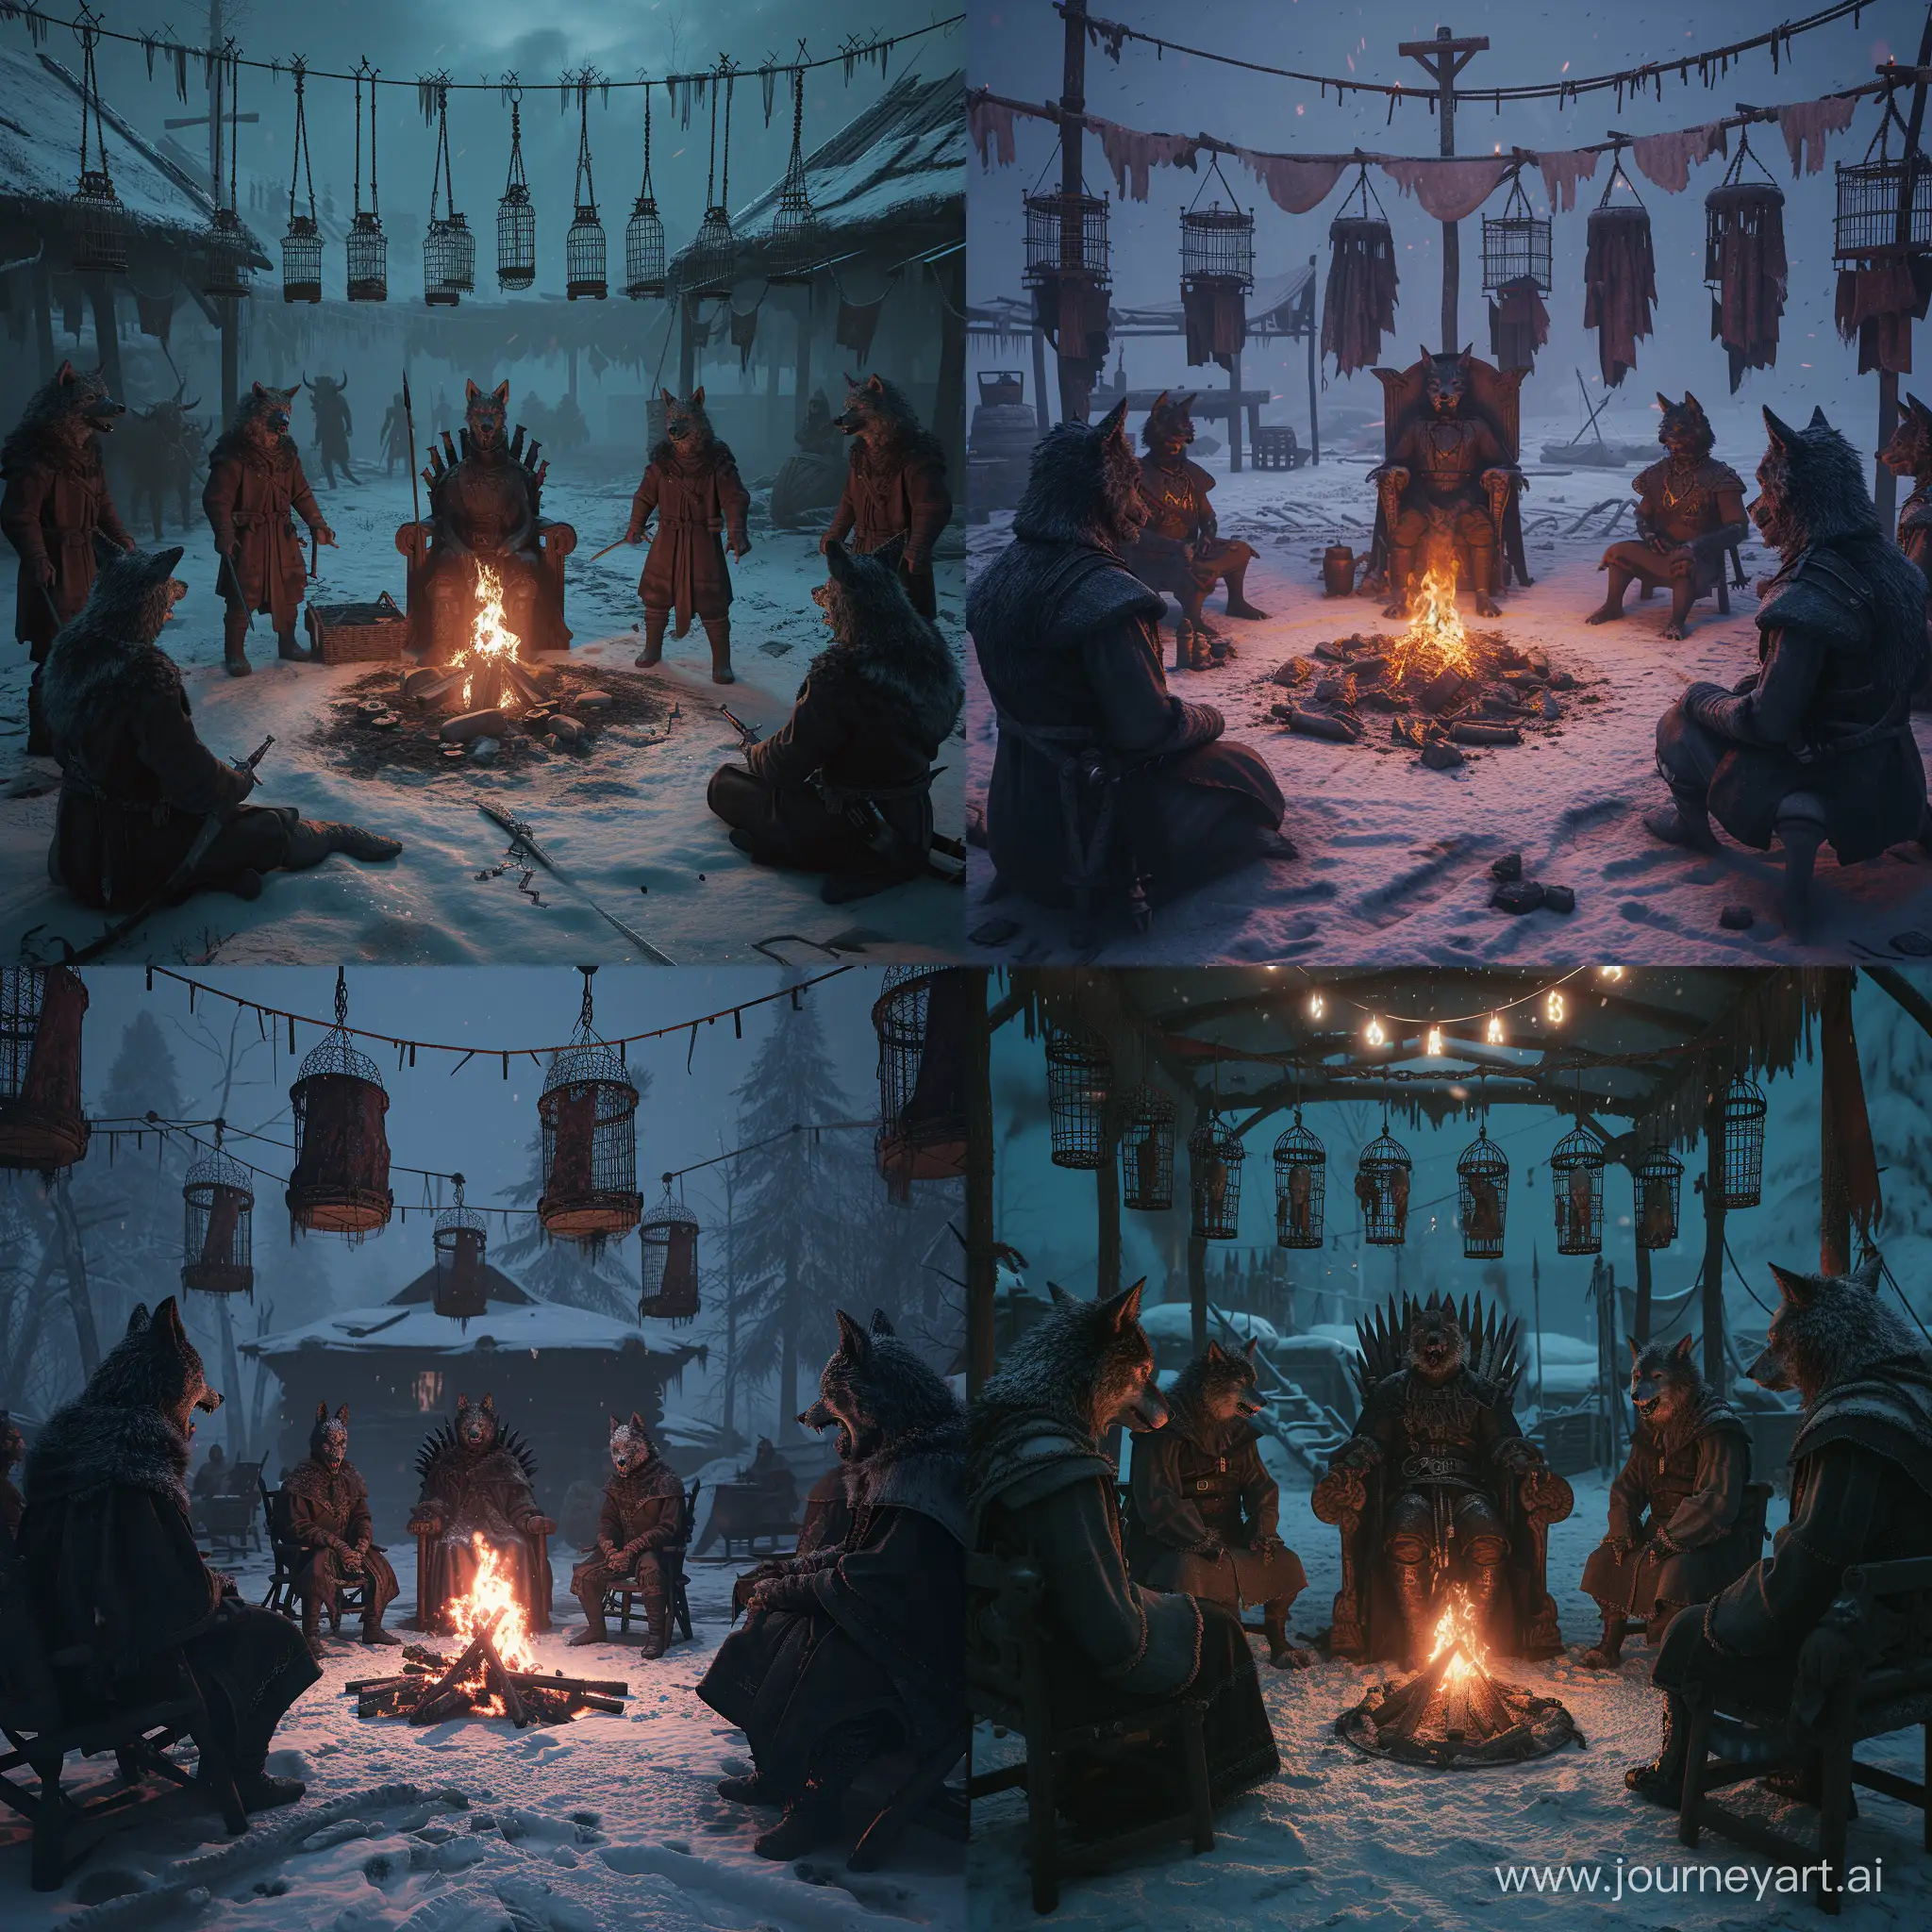 Ferocious-WolfHeaded-Warriors-Convene-Around-Snowy-Throne-in-Unreal-Horror-Camp